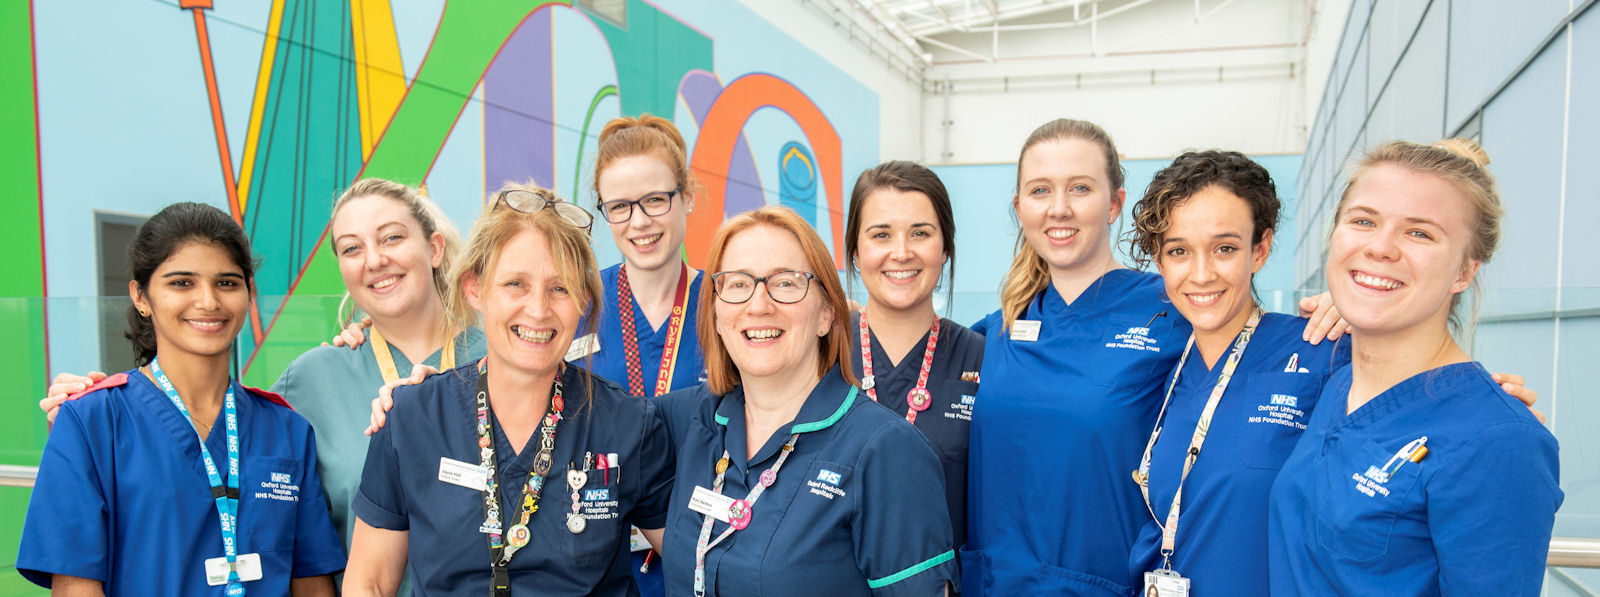 Nine smiling women in nurses' uniforms, large glass-roofed atrium behind